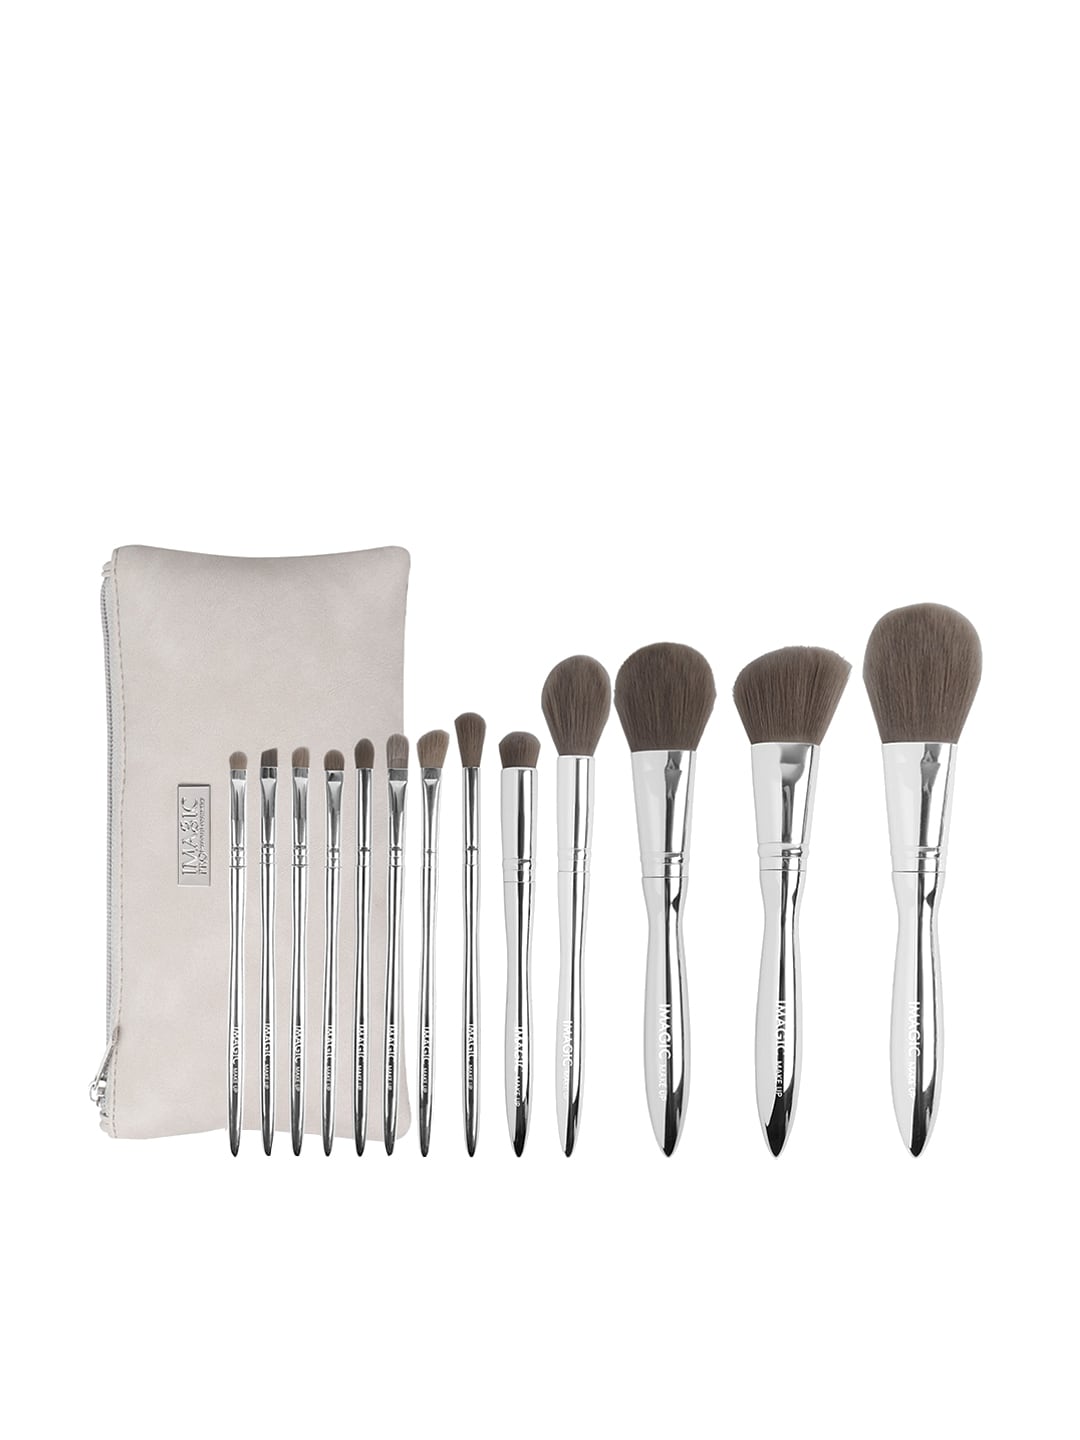 IMAGIC PROfessional Cosmetics 13 Pcs Makeup Brush Set with Grey Zipper Bag - TL-438 Price in India